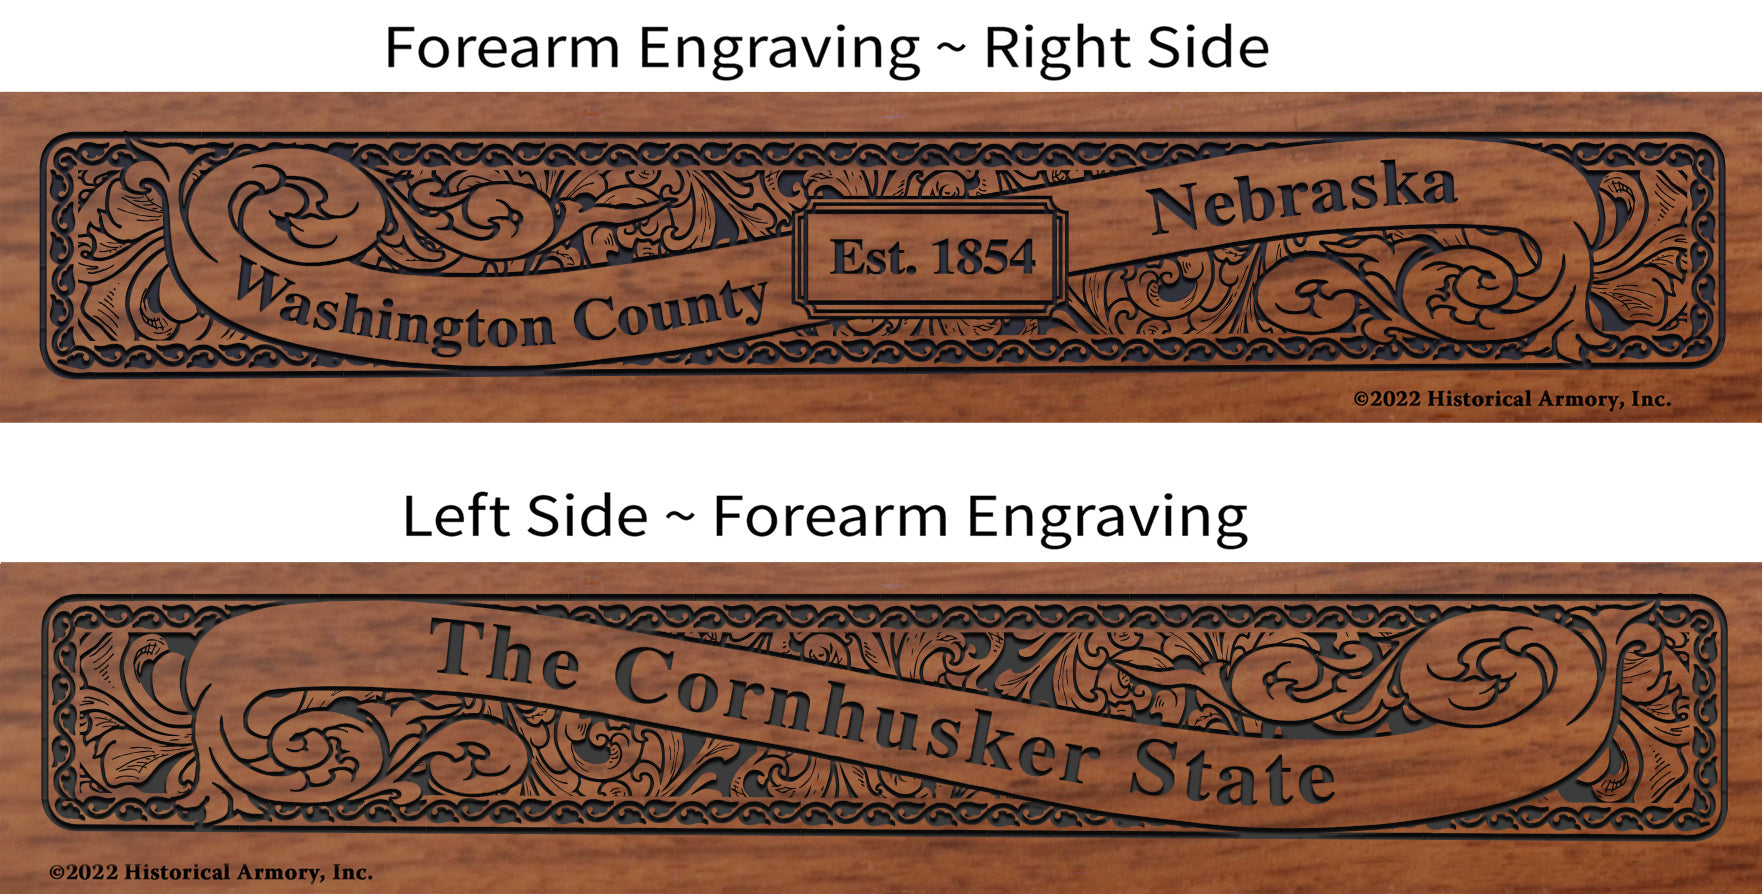 Washington County Nebraska Engraved Rifle Forearm